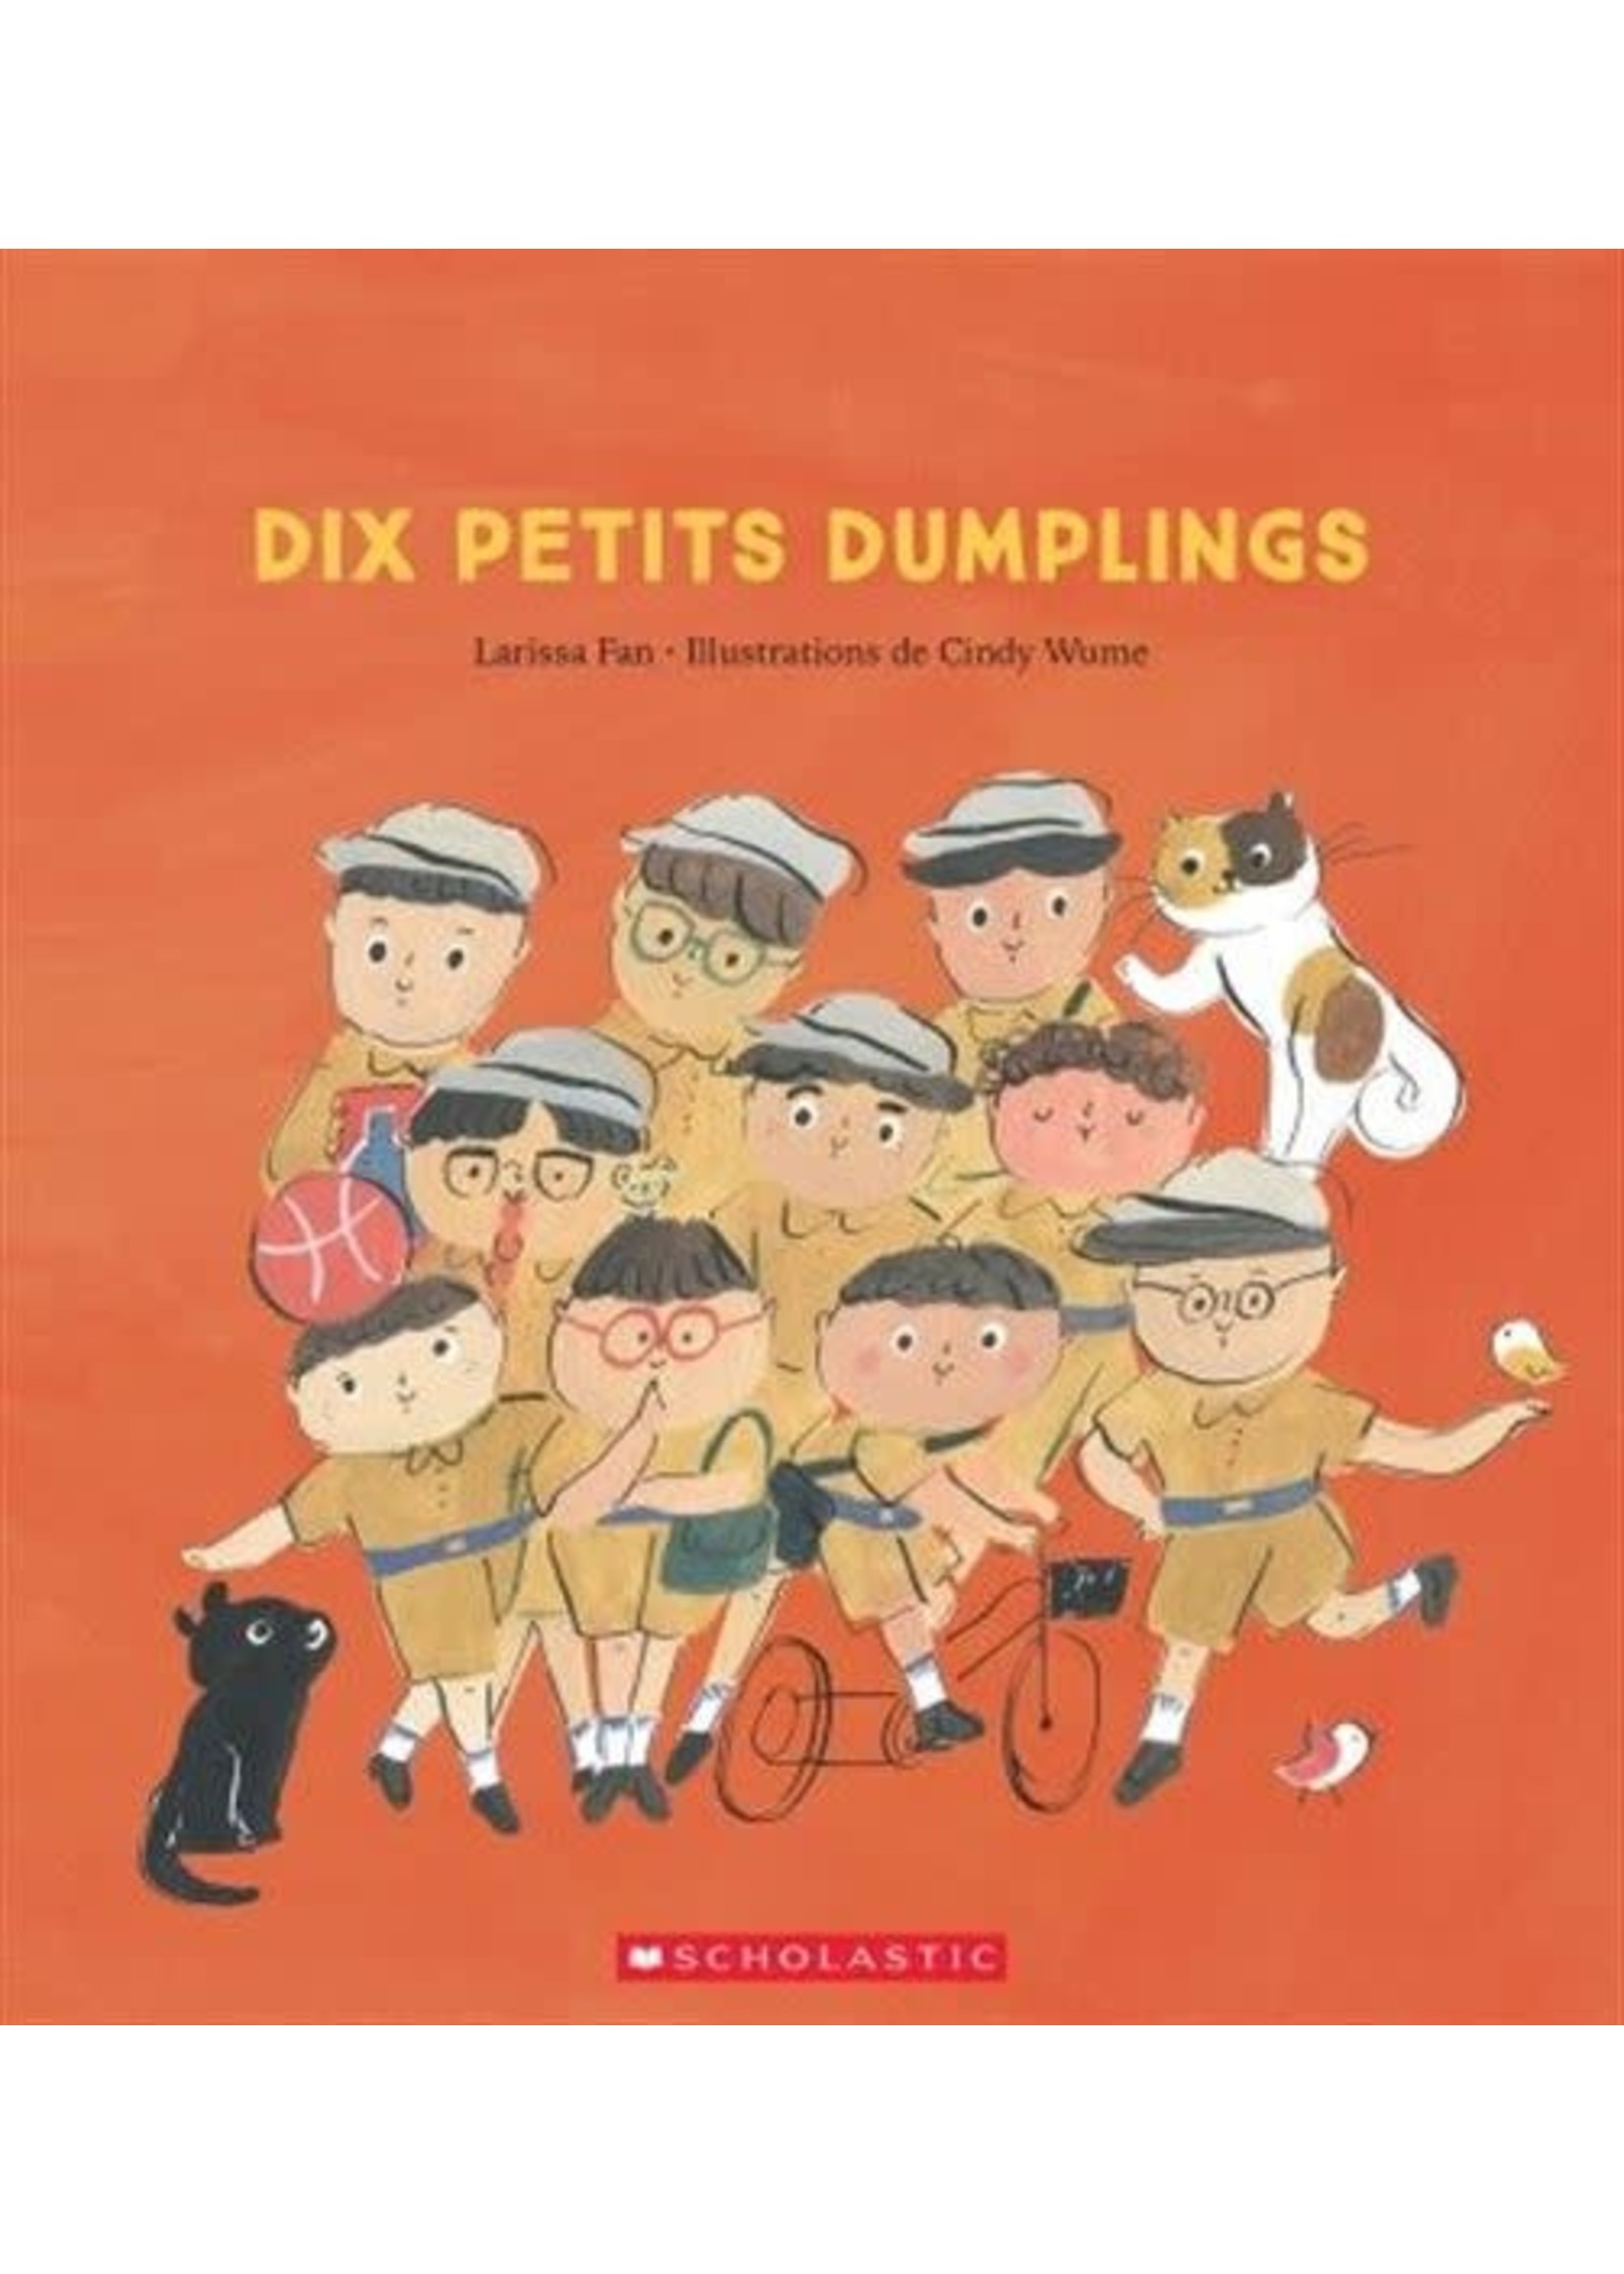 Dix petits dumplings De Cindy Wume